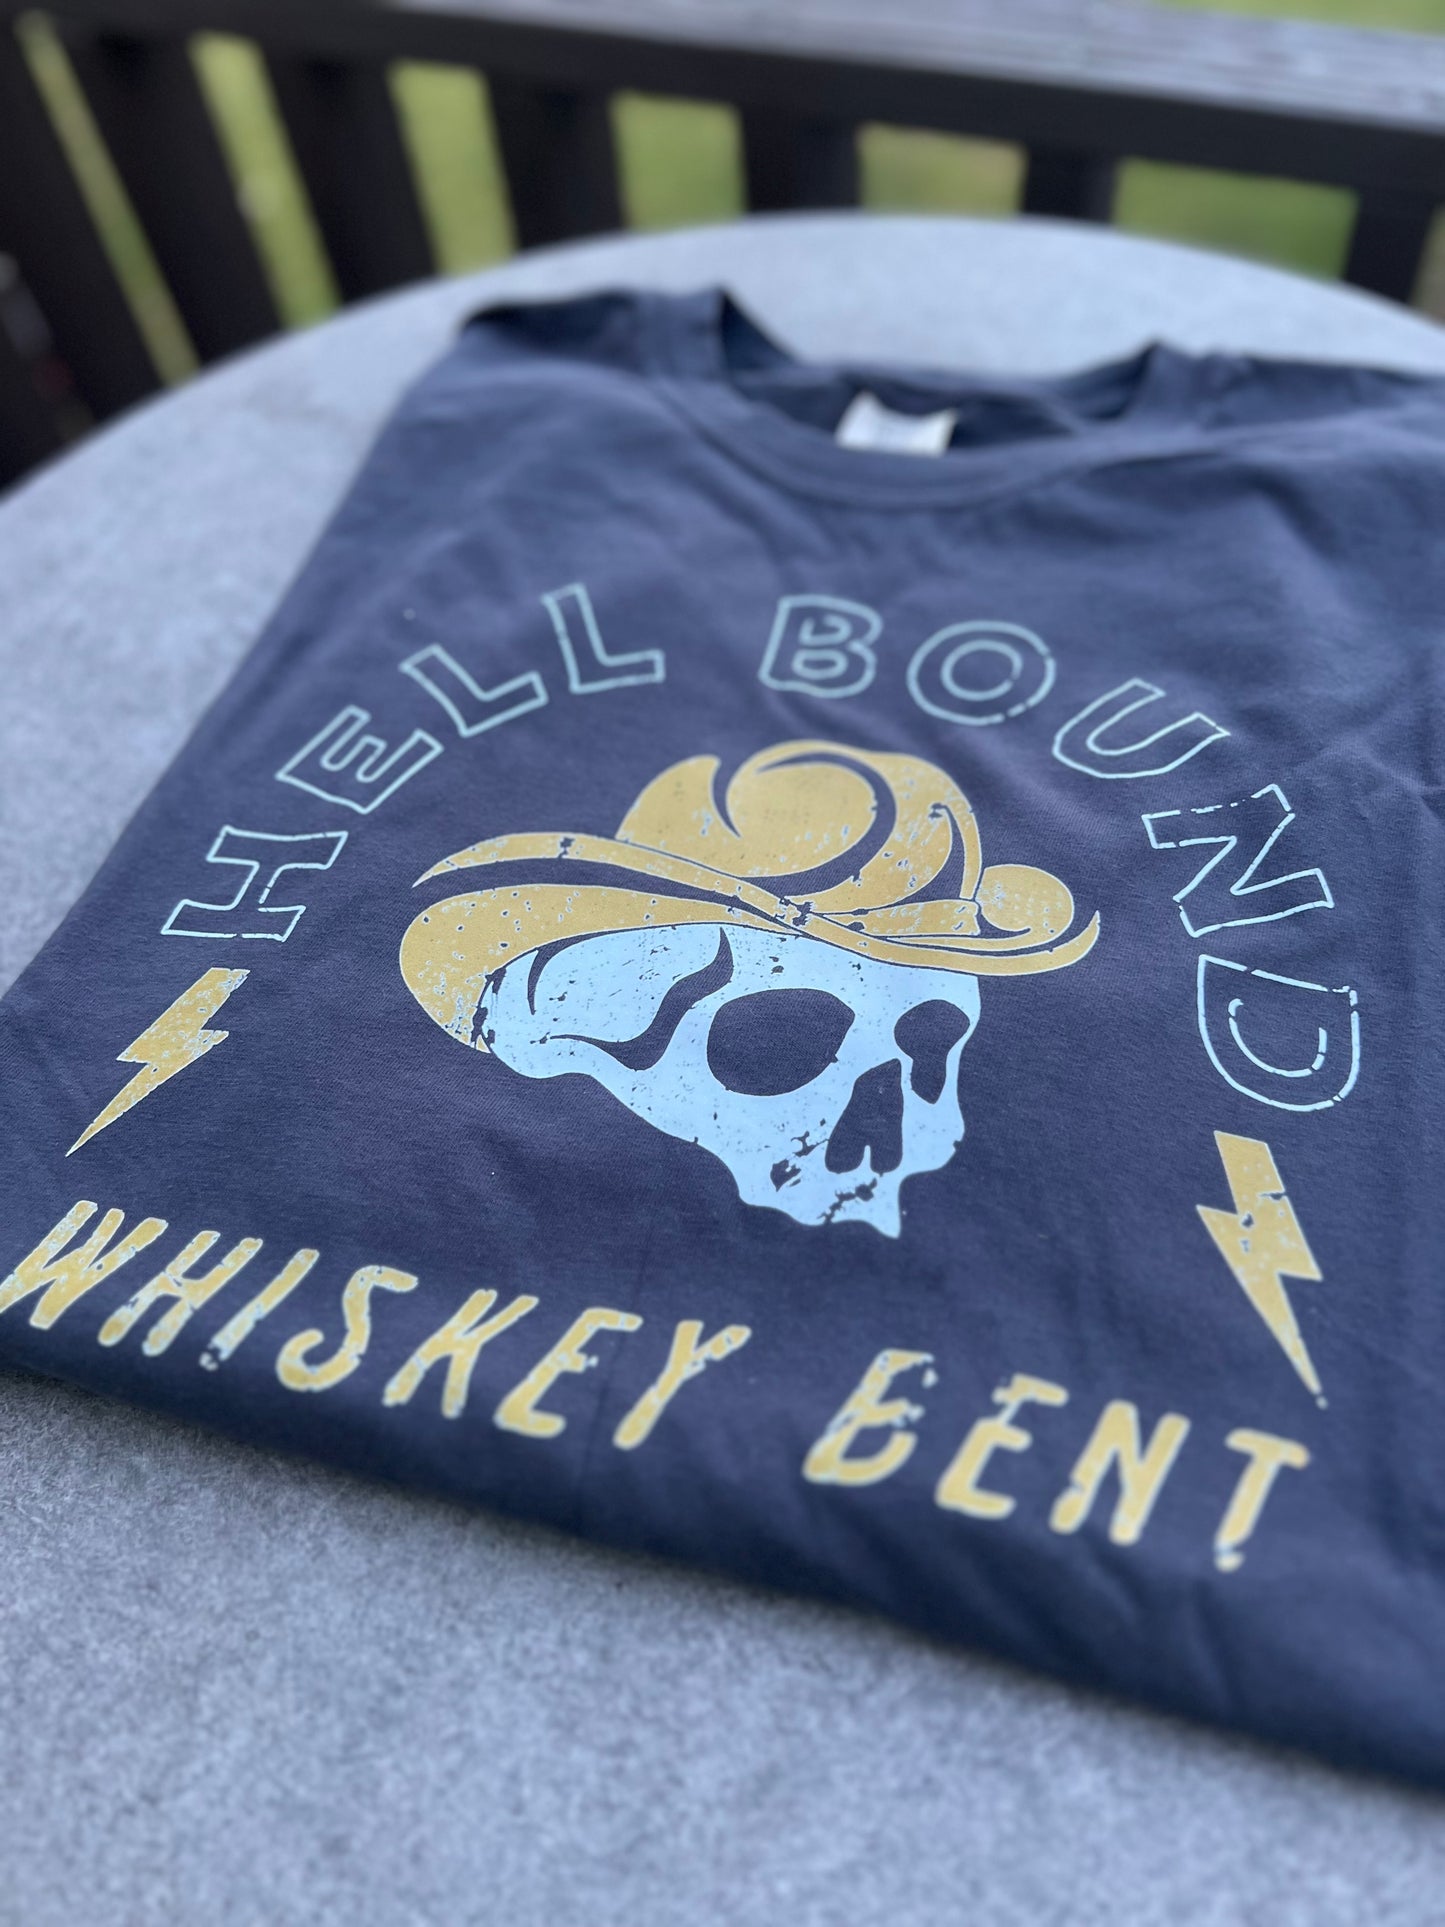 Whiskey Bent Western Skull | Comfort Colors Tee